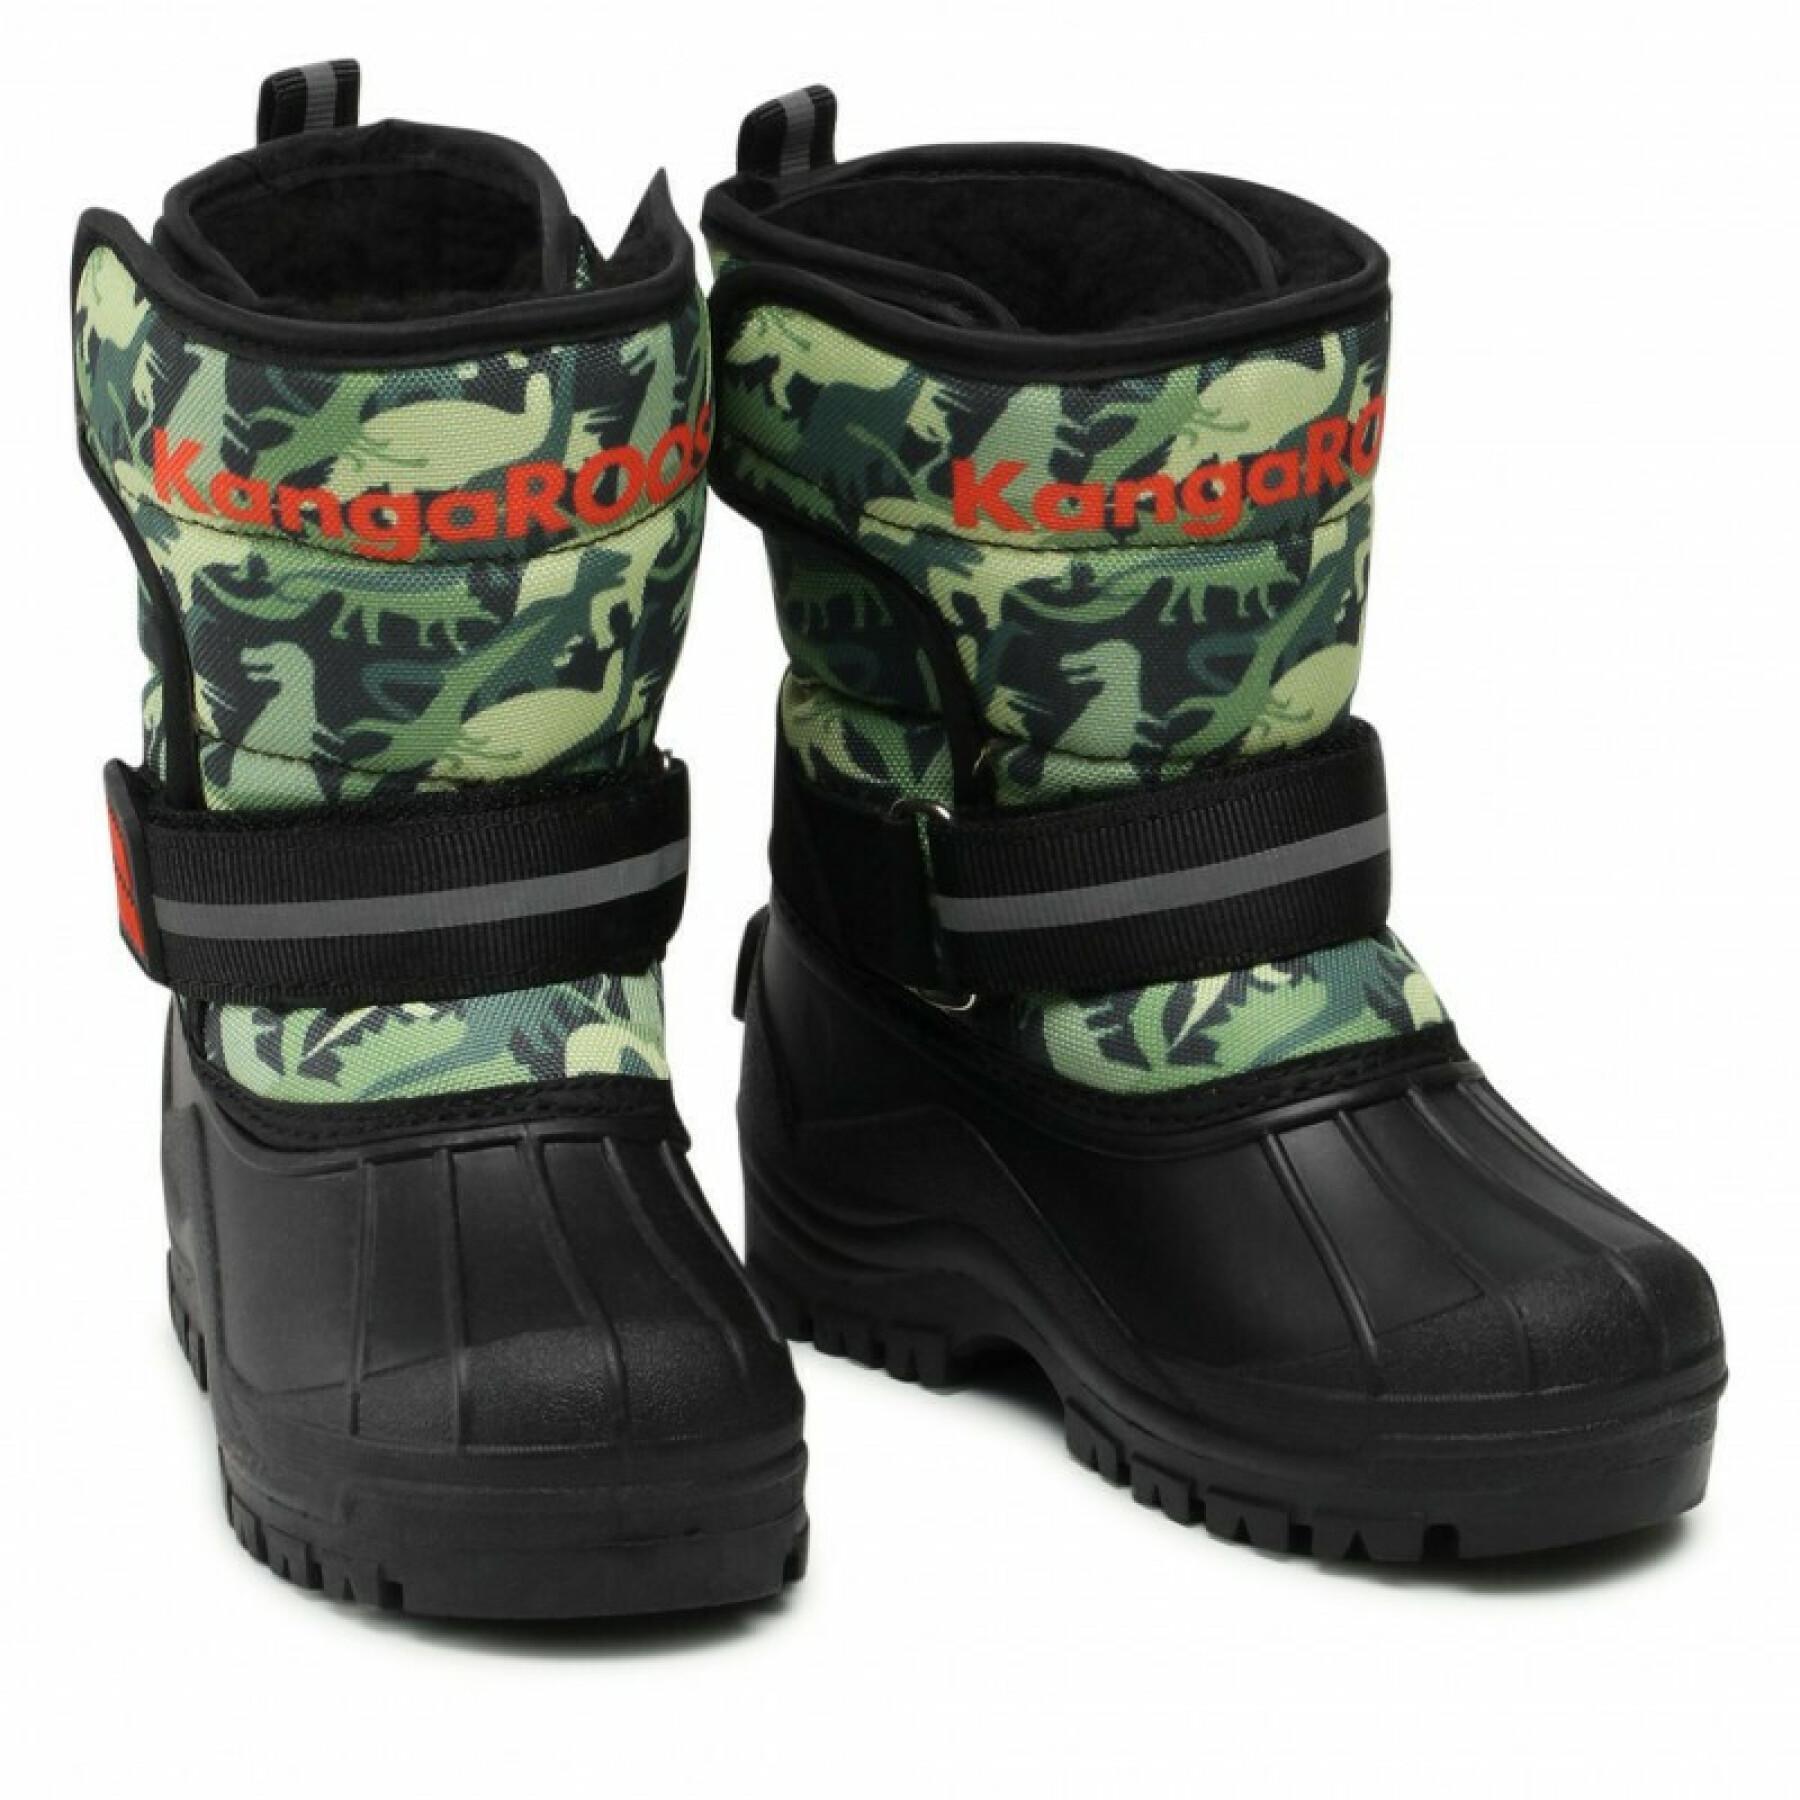 Baby boots KangaROOS K-Shell